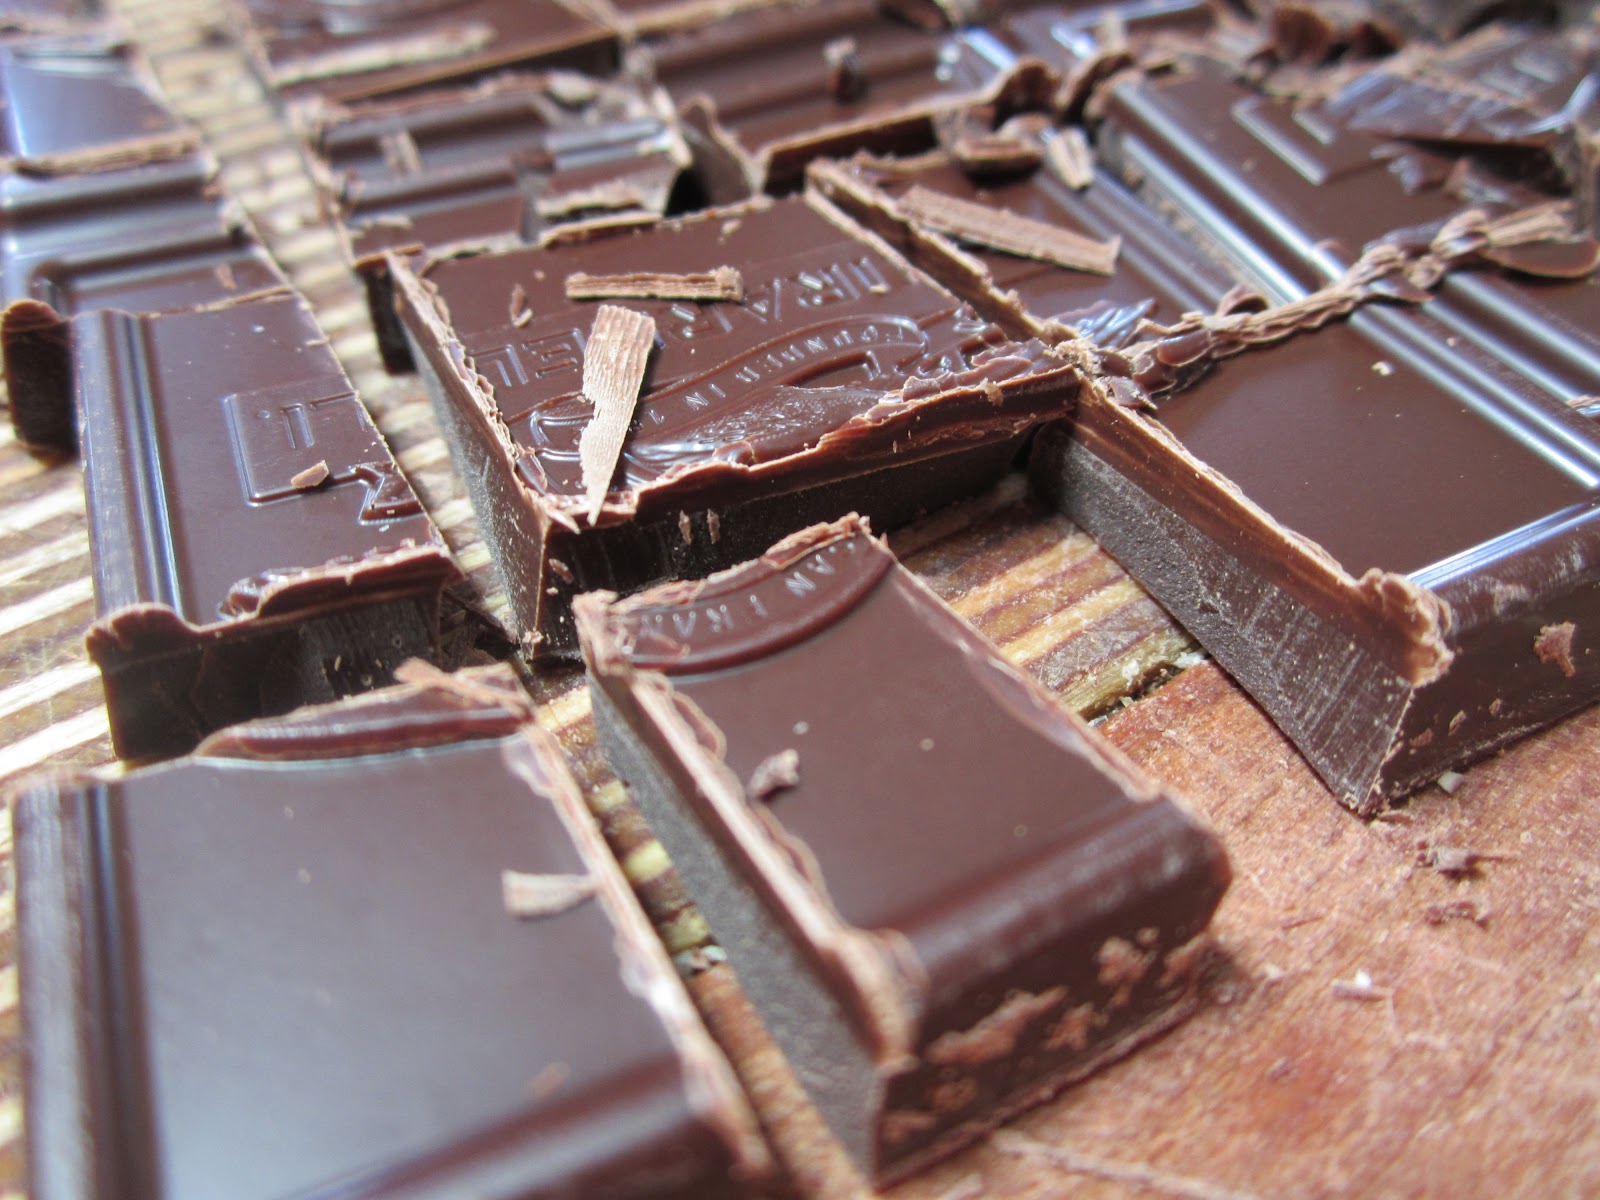 Recipes For Laughter: The Chocolatiest Chocolate Pecan Cookies